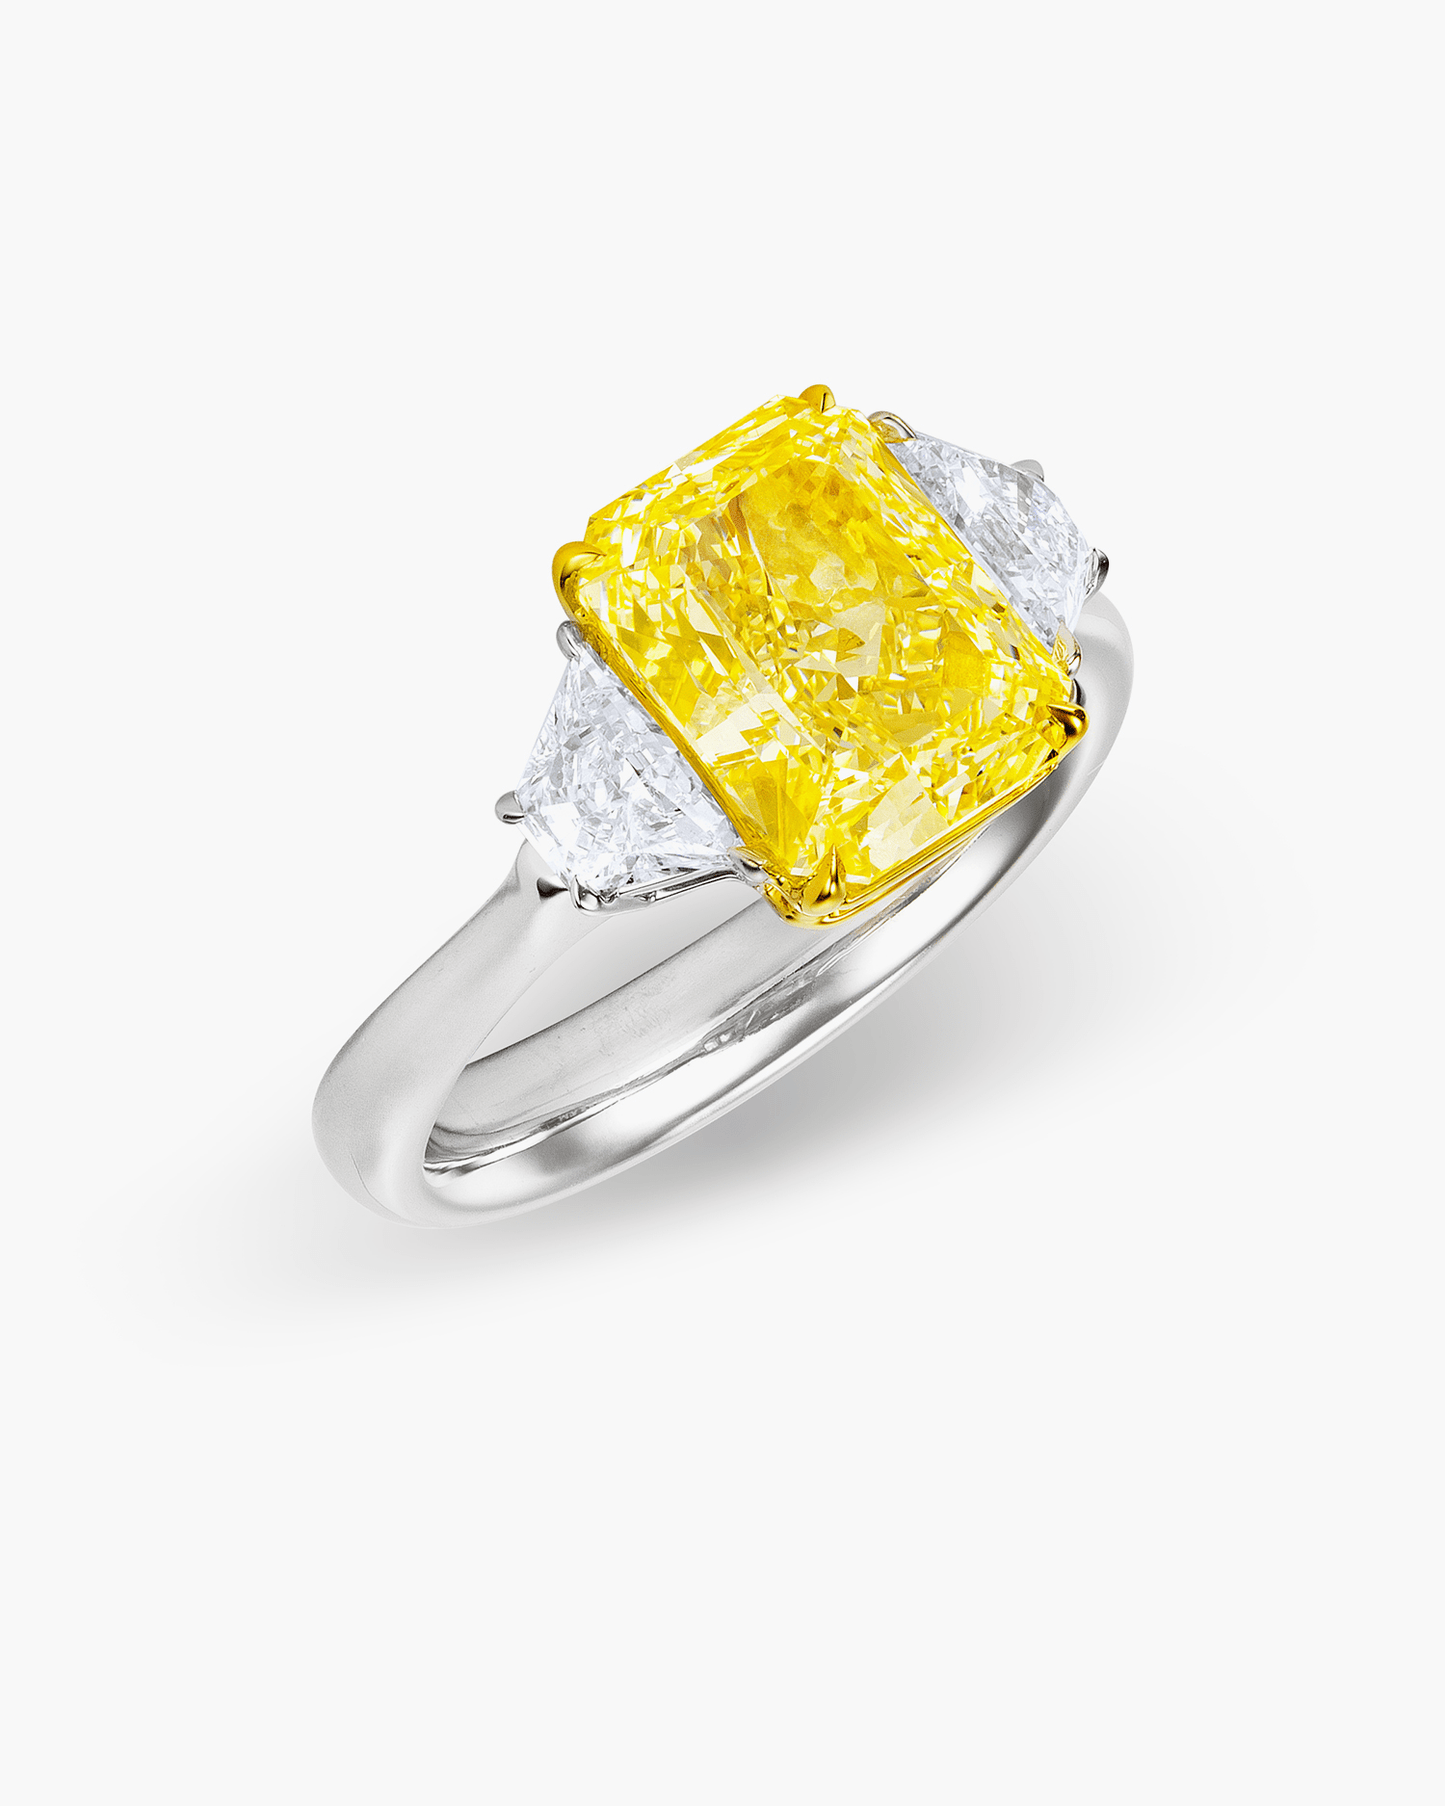 3.03 carat Radiant Cut Yellow and White Diamond Ring